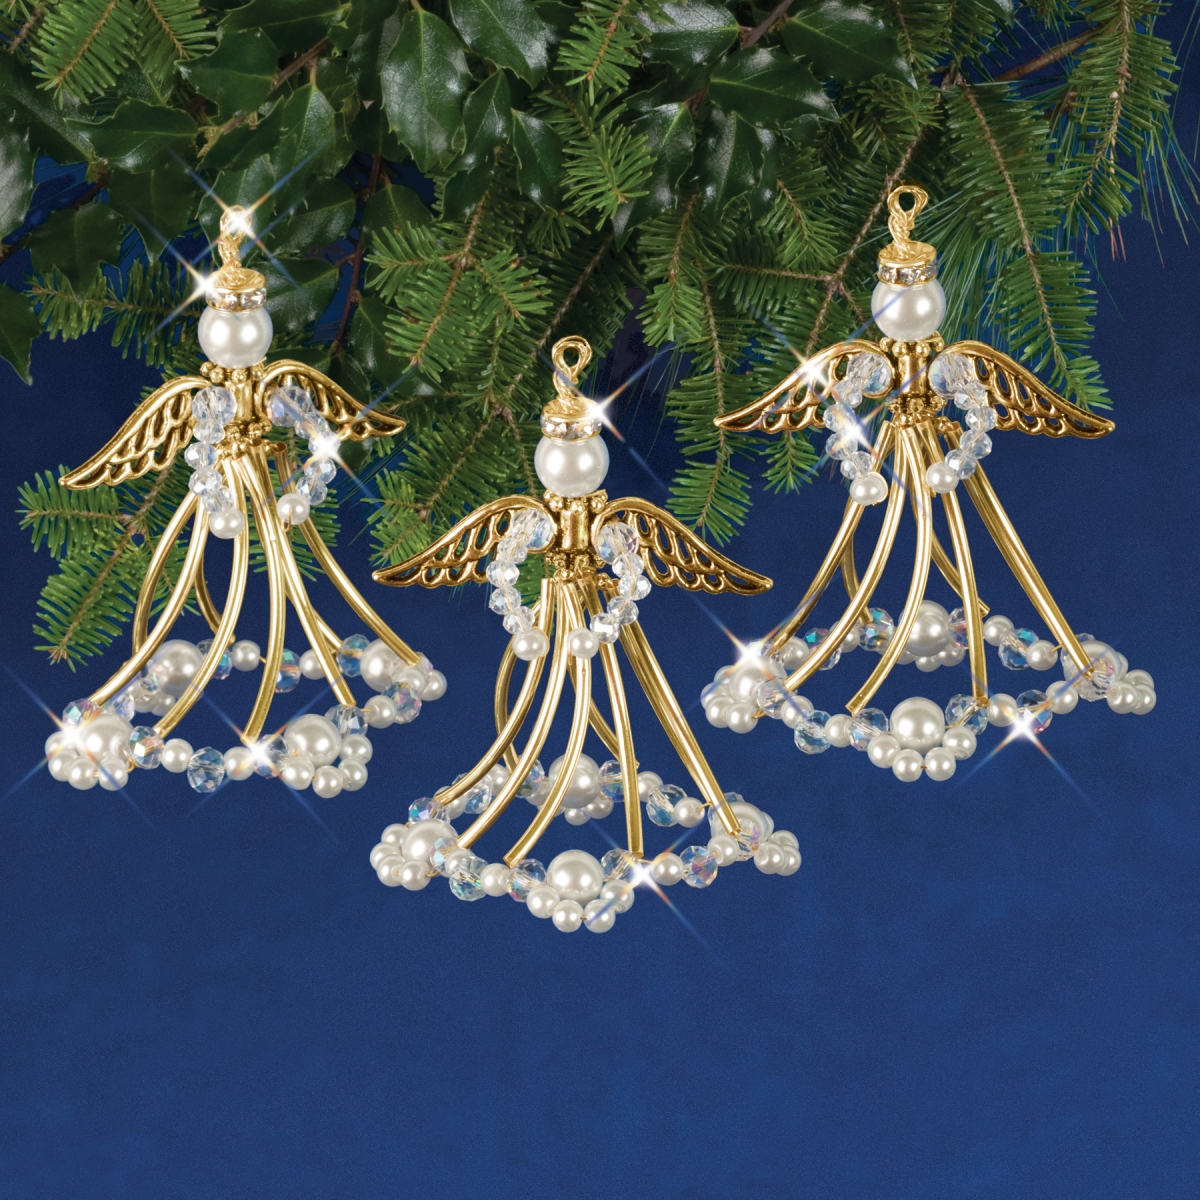 Hbok-nc006 Golden Angels Beaded Ornament Kit